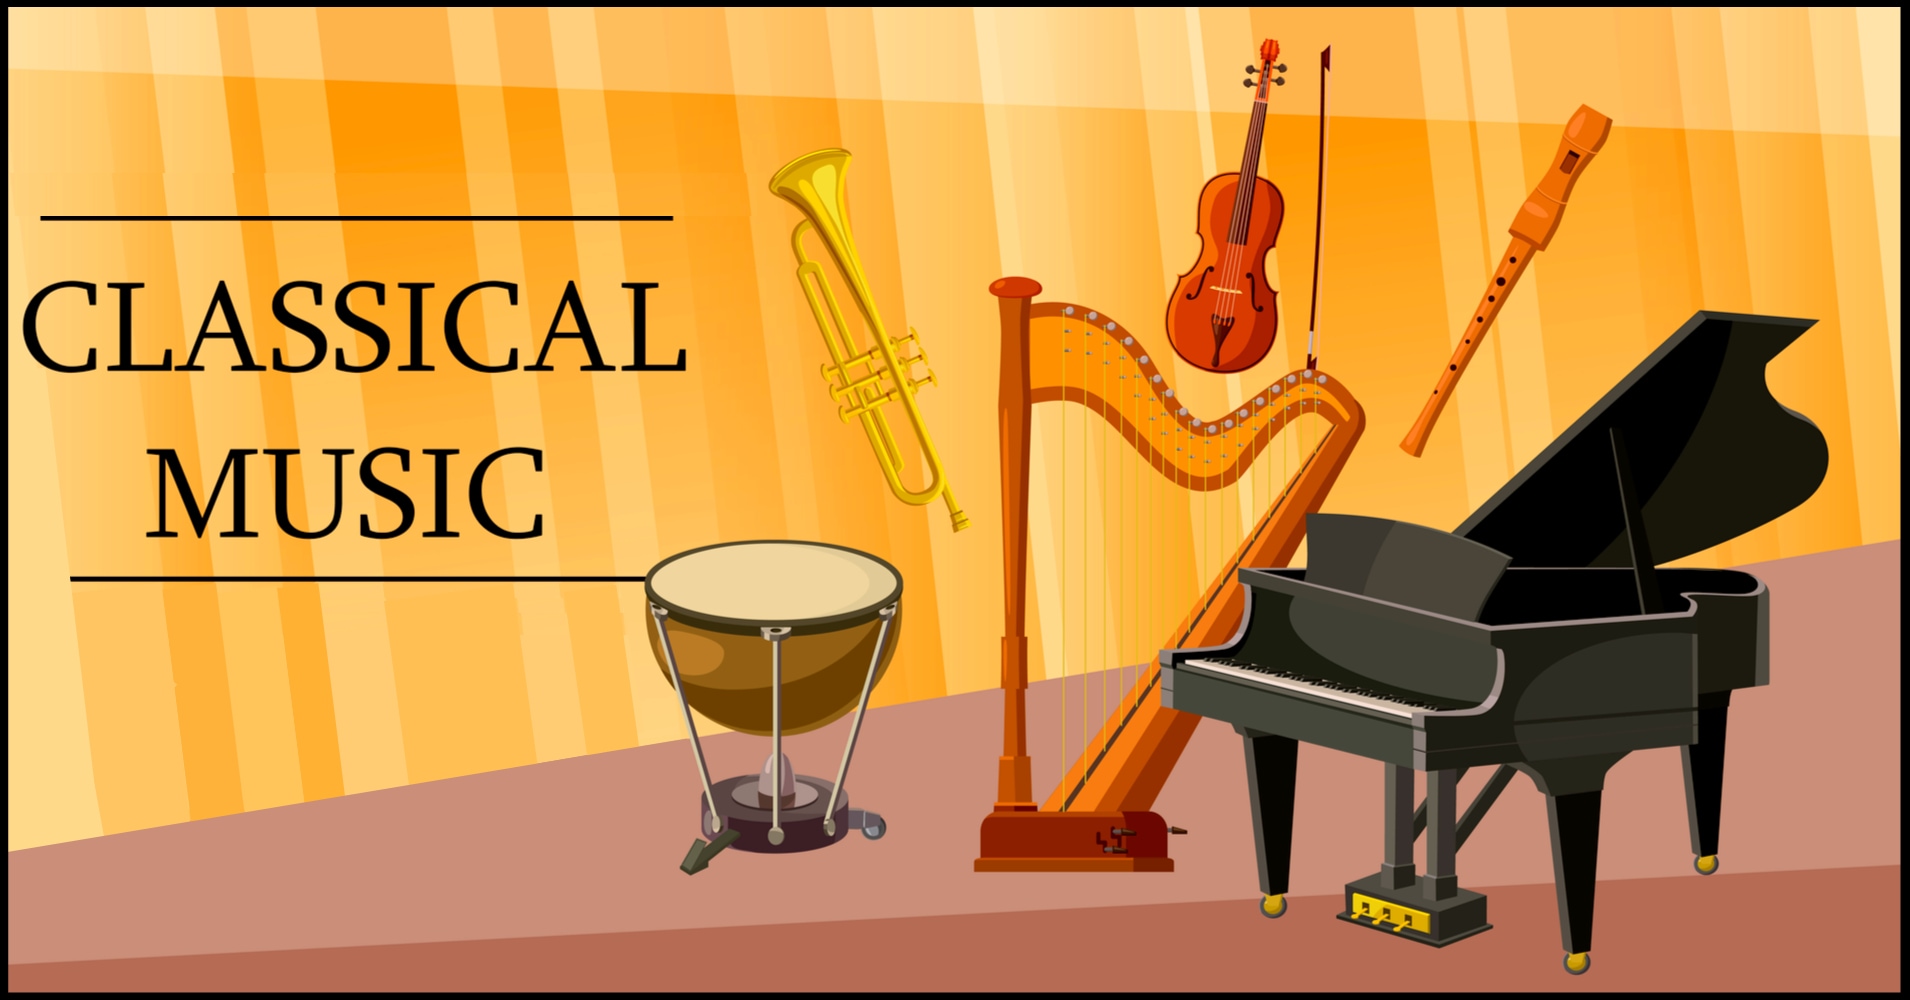 different eras of classical music